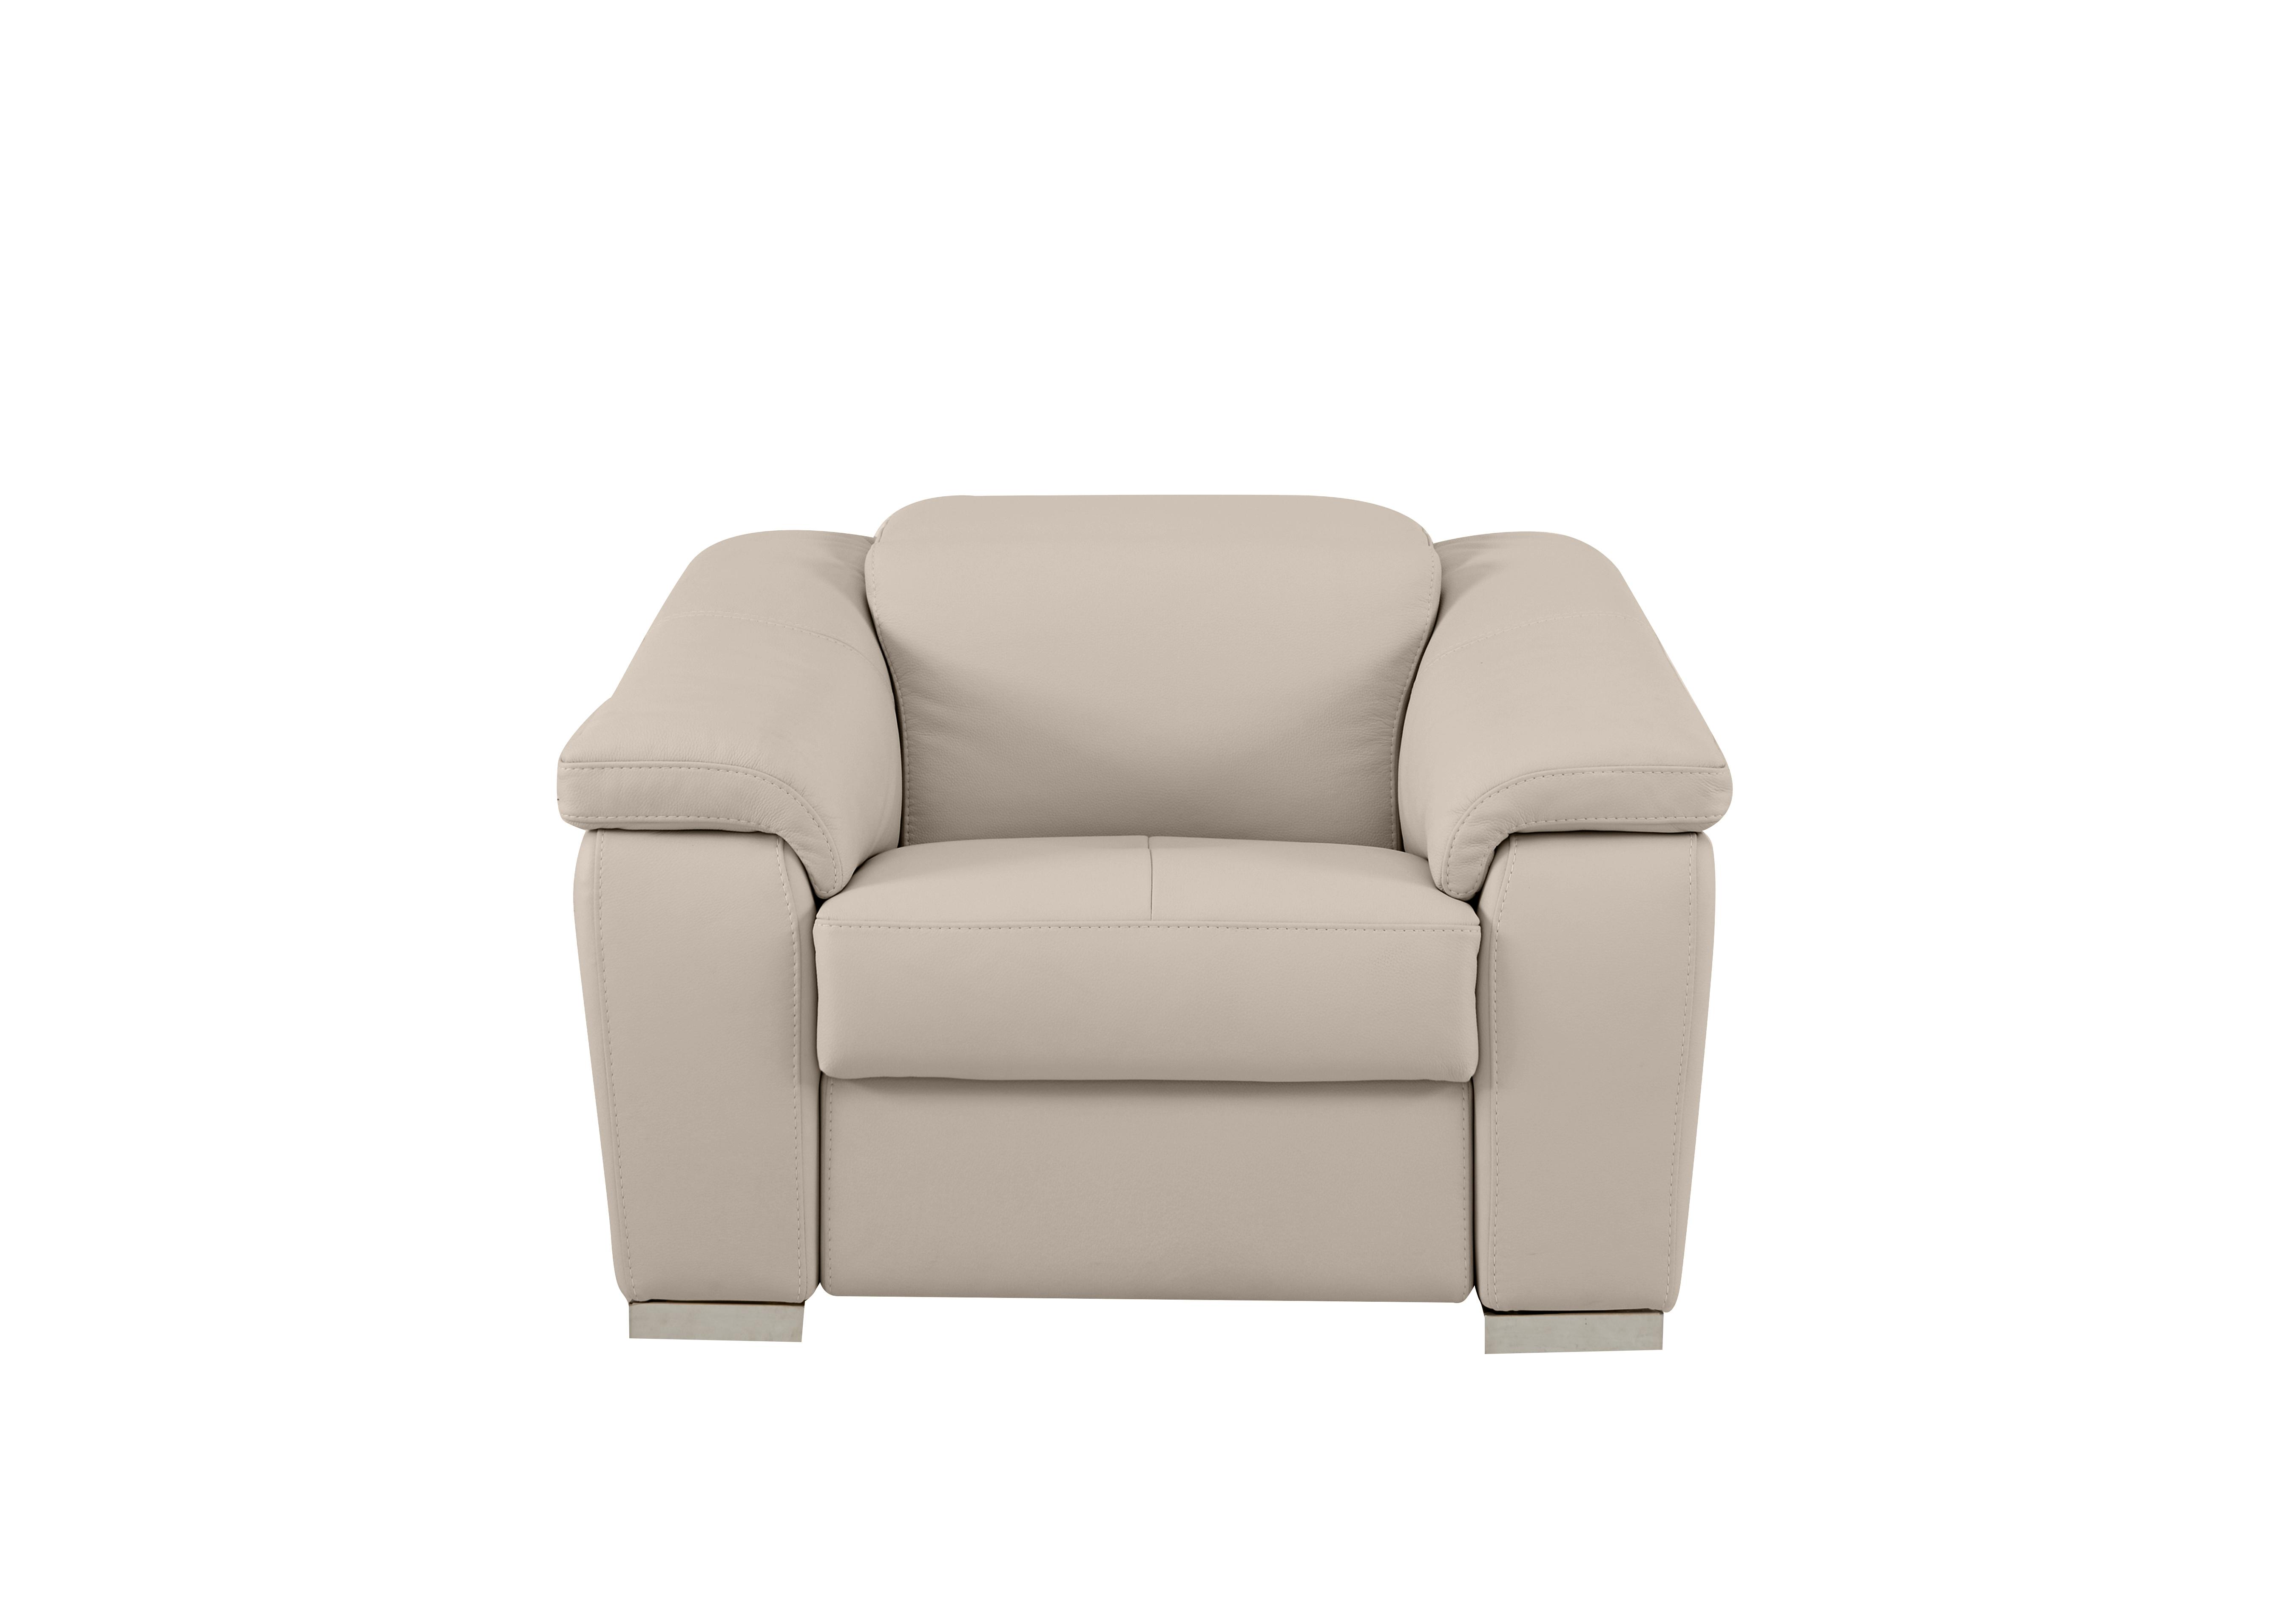 Galileo Leather Armchair in Botero Crema 2156 Ch on Furniture Village